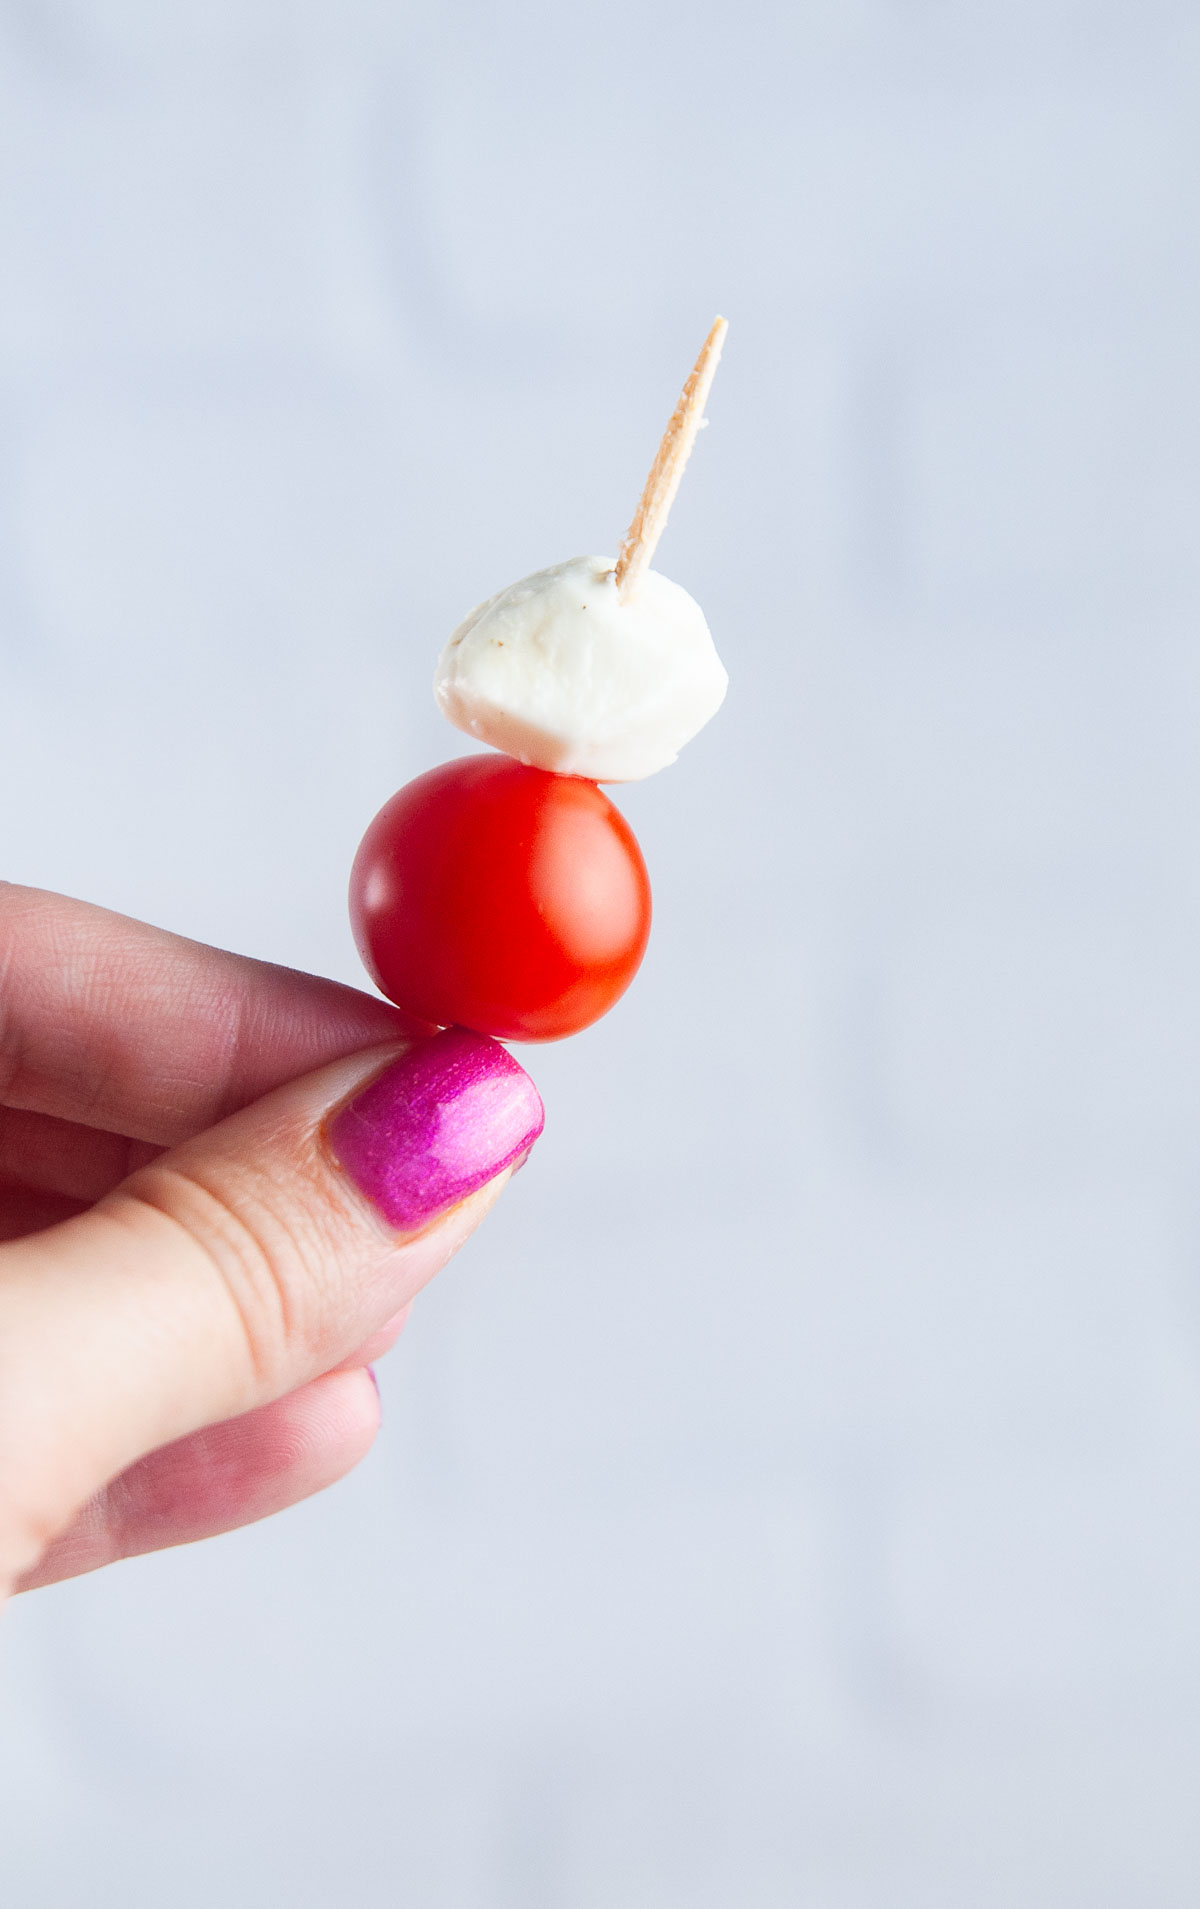 Spear a mini mozzarella ball onto the toothpick after the cherry tomato.